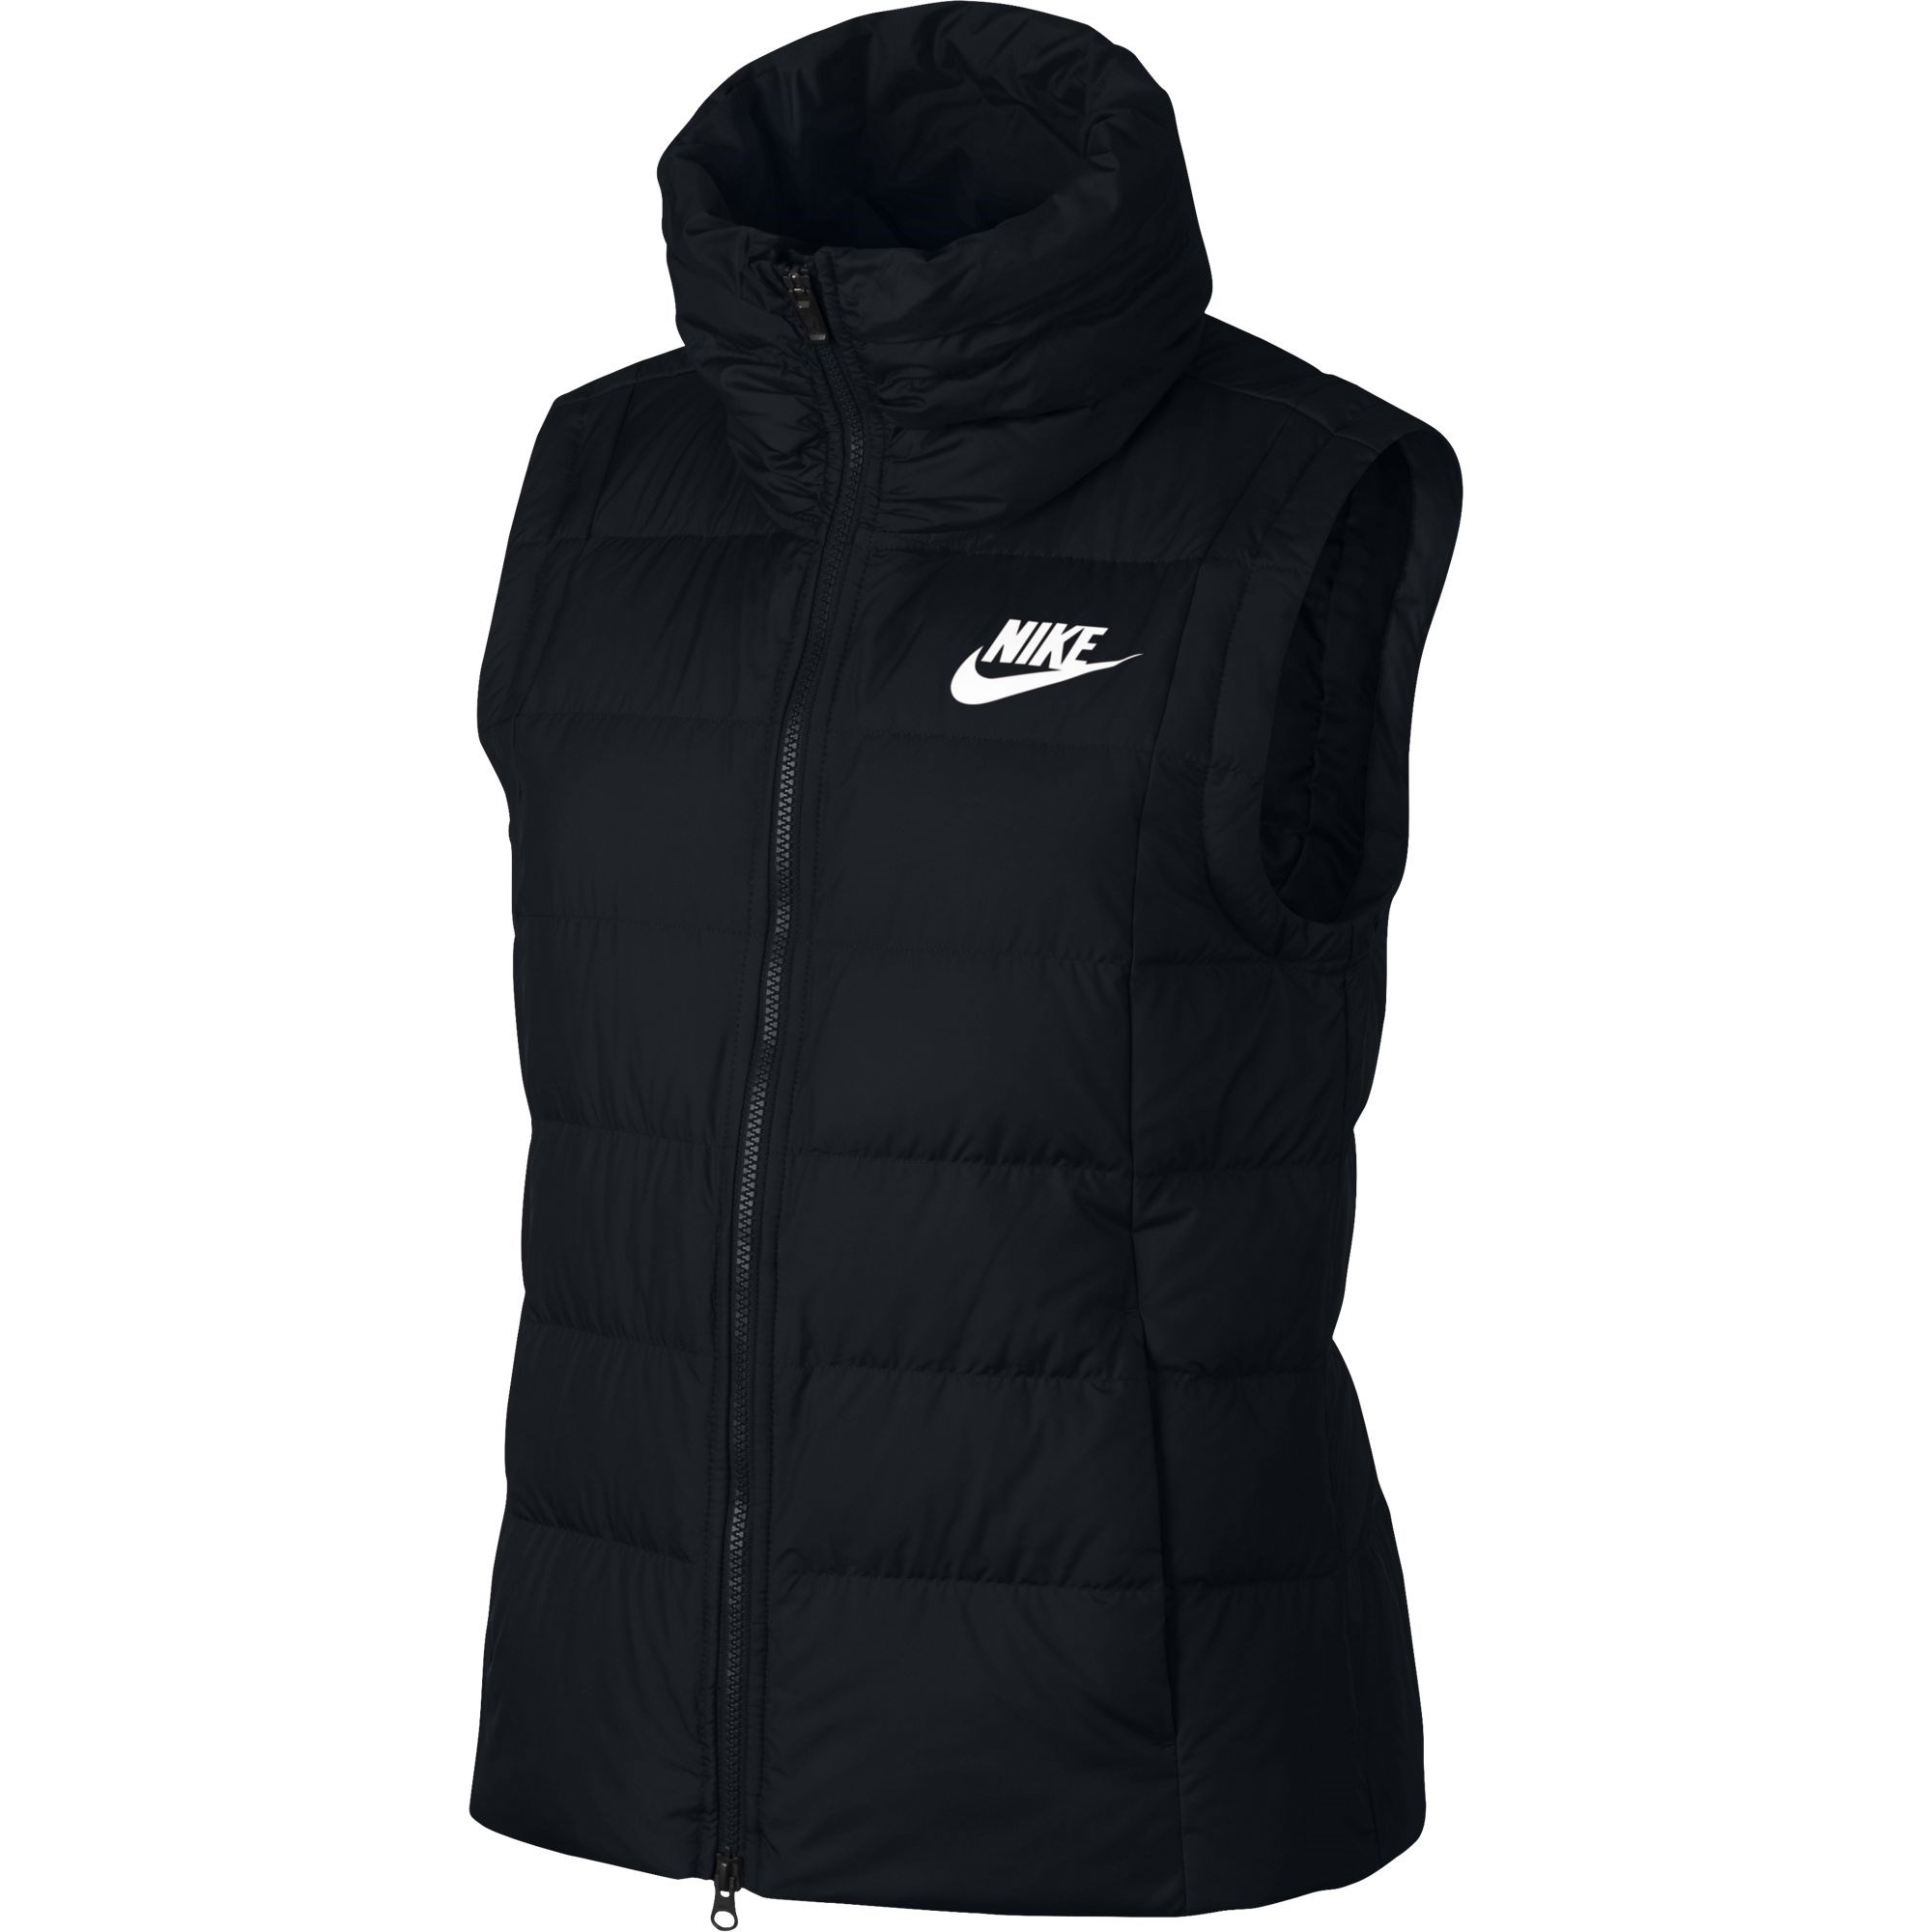 Nike W Nsw Dwn Fill Vest Bayan Yelek Ürün kodu: 854857-010 | Etichet Sport